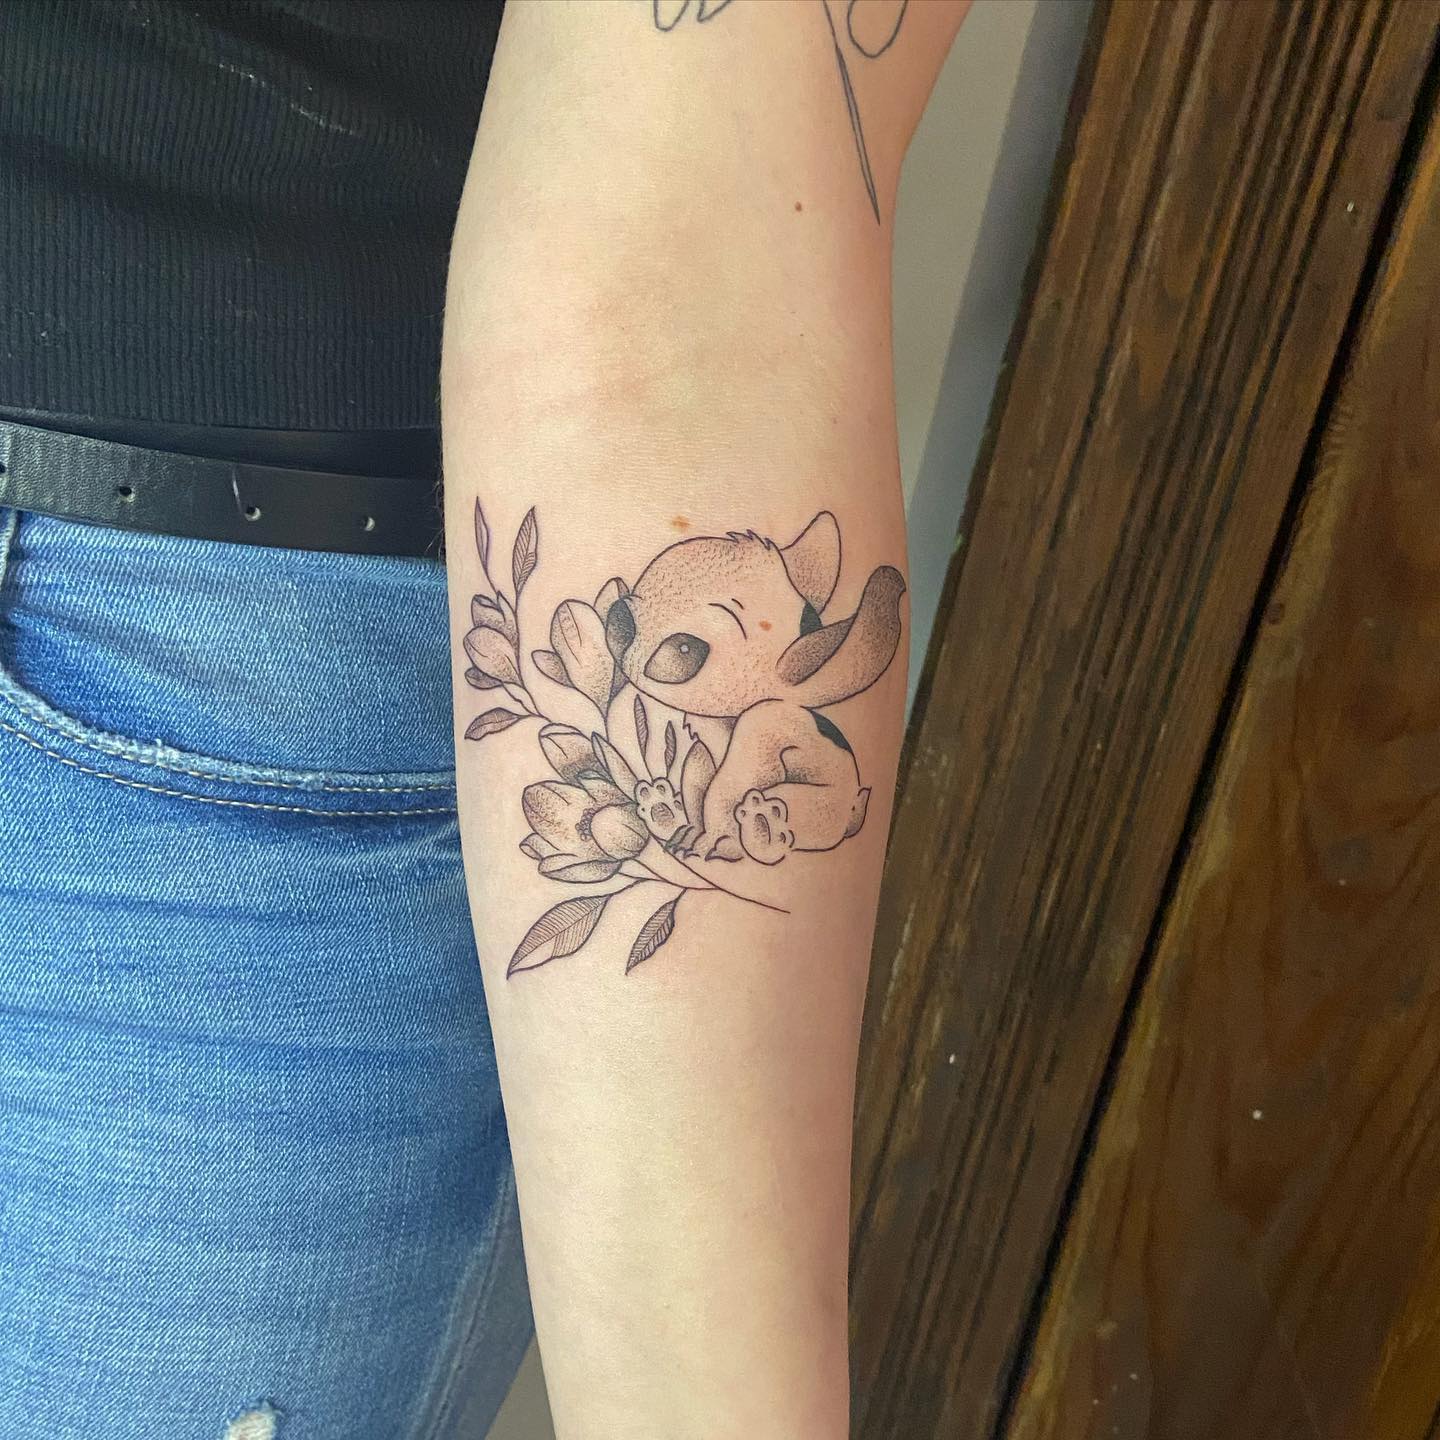 Tatuaje de Stitch en el brazo